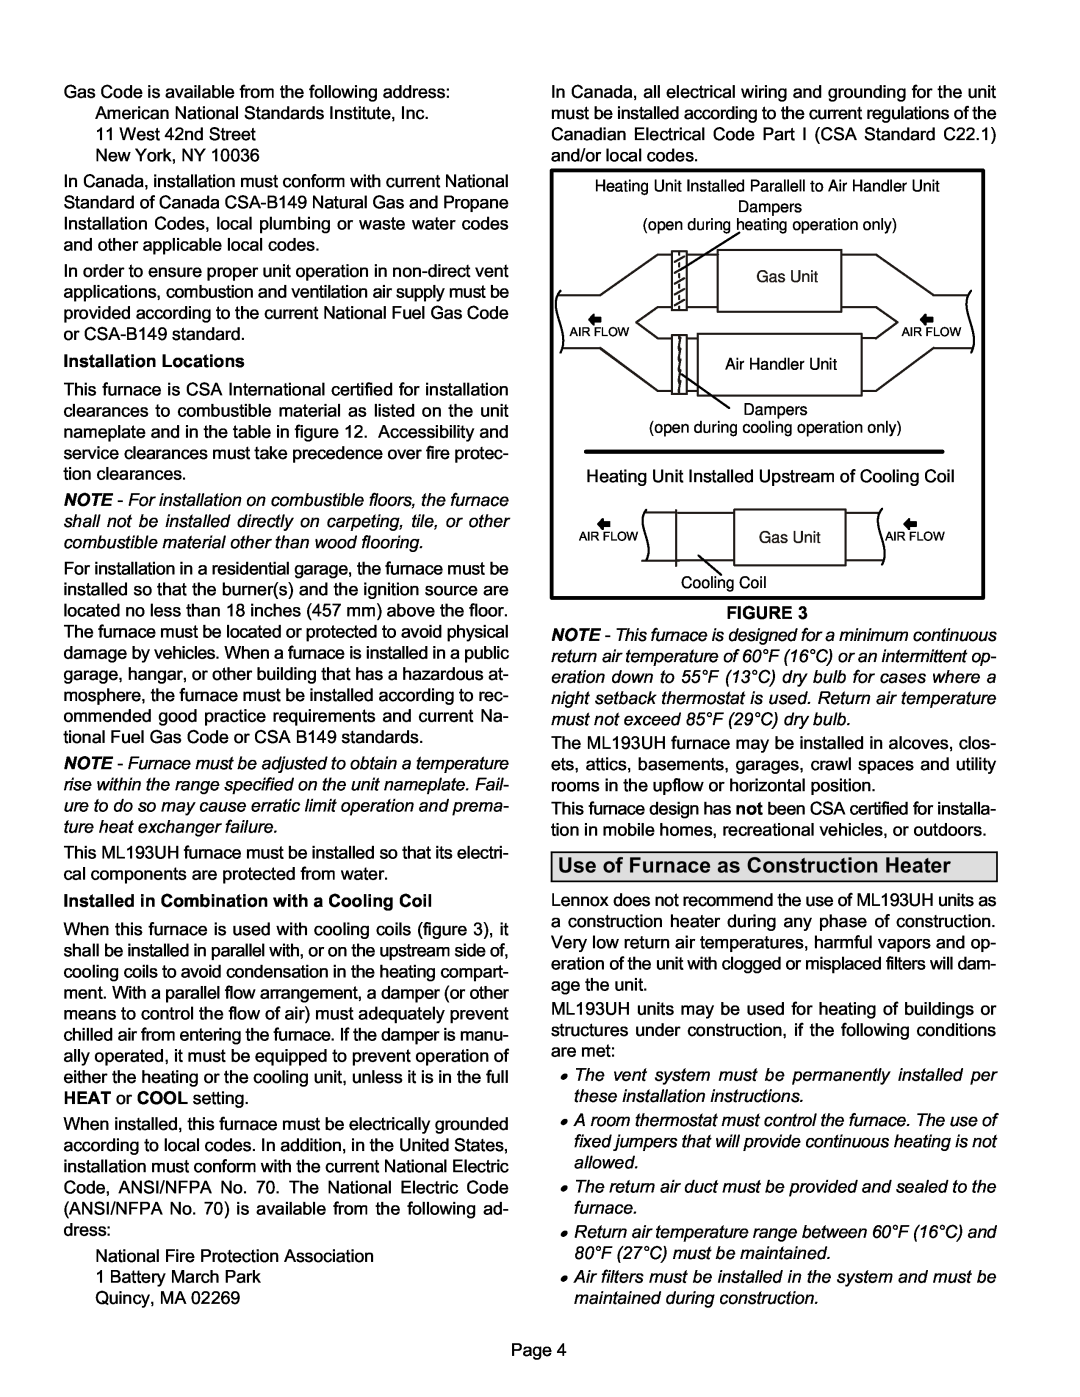 Lennox International Inc ML193UH installation instructions Use of Furnace as Construction Heater, Installation Locations 